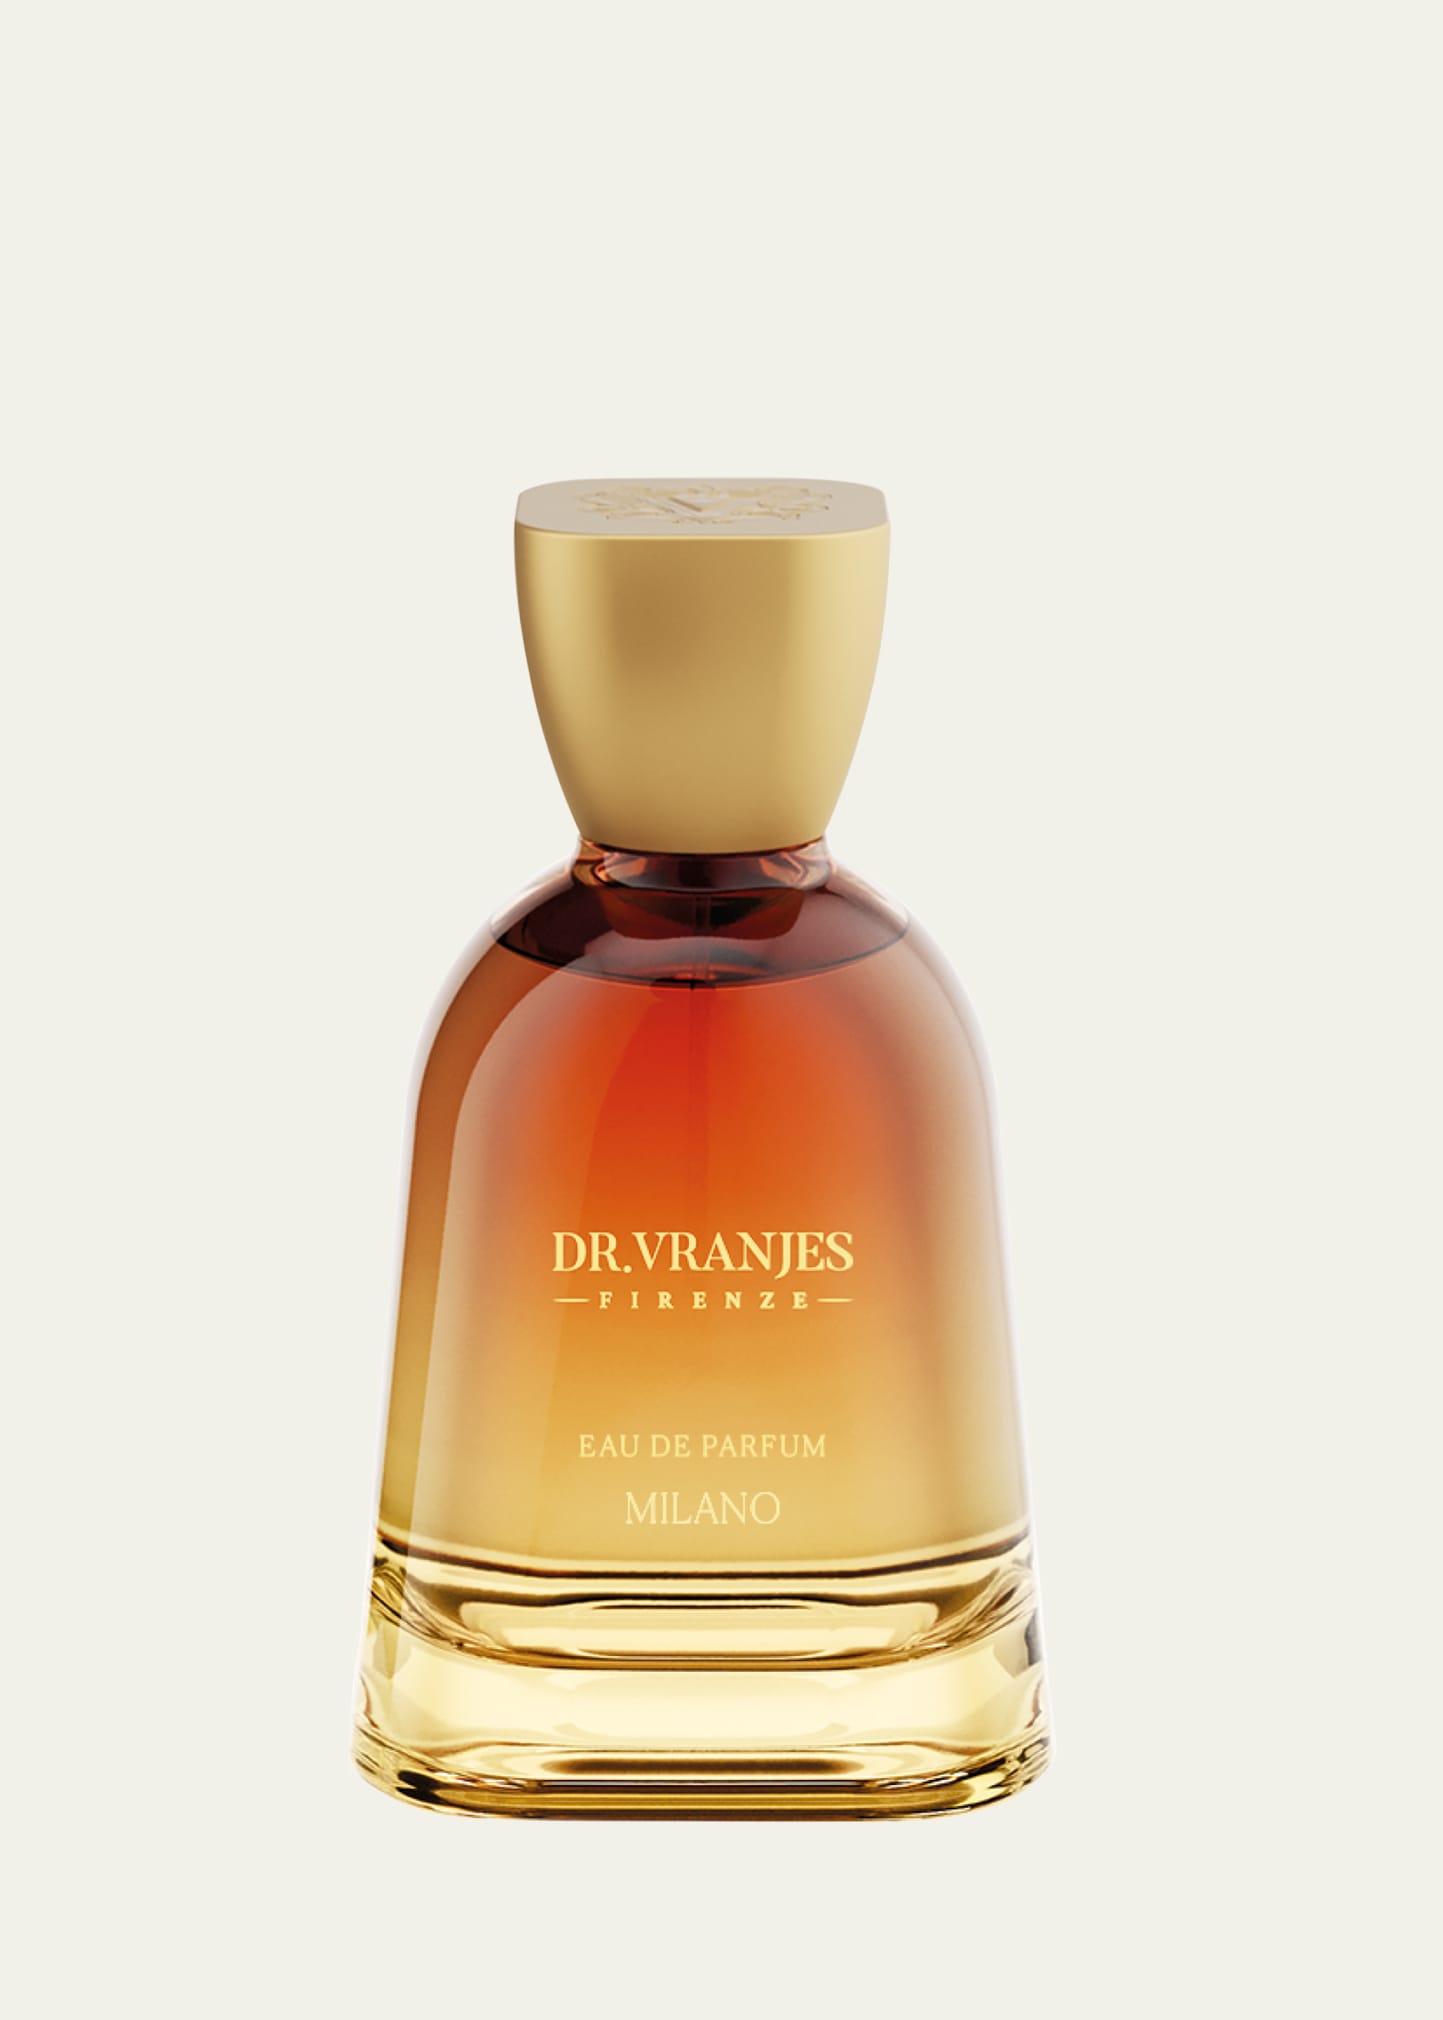 Dr. Vranjes Firenze Milano Eau De Parfum, 3.4 oz. - Bergdorf Goodman